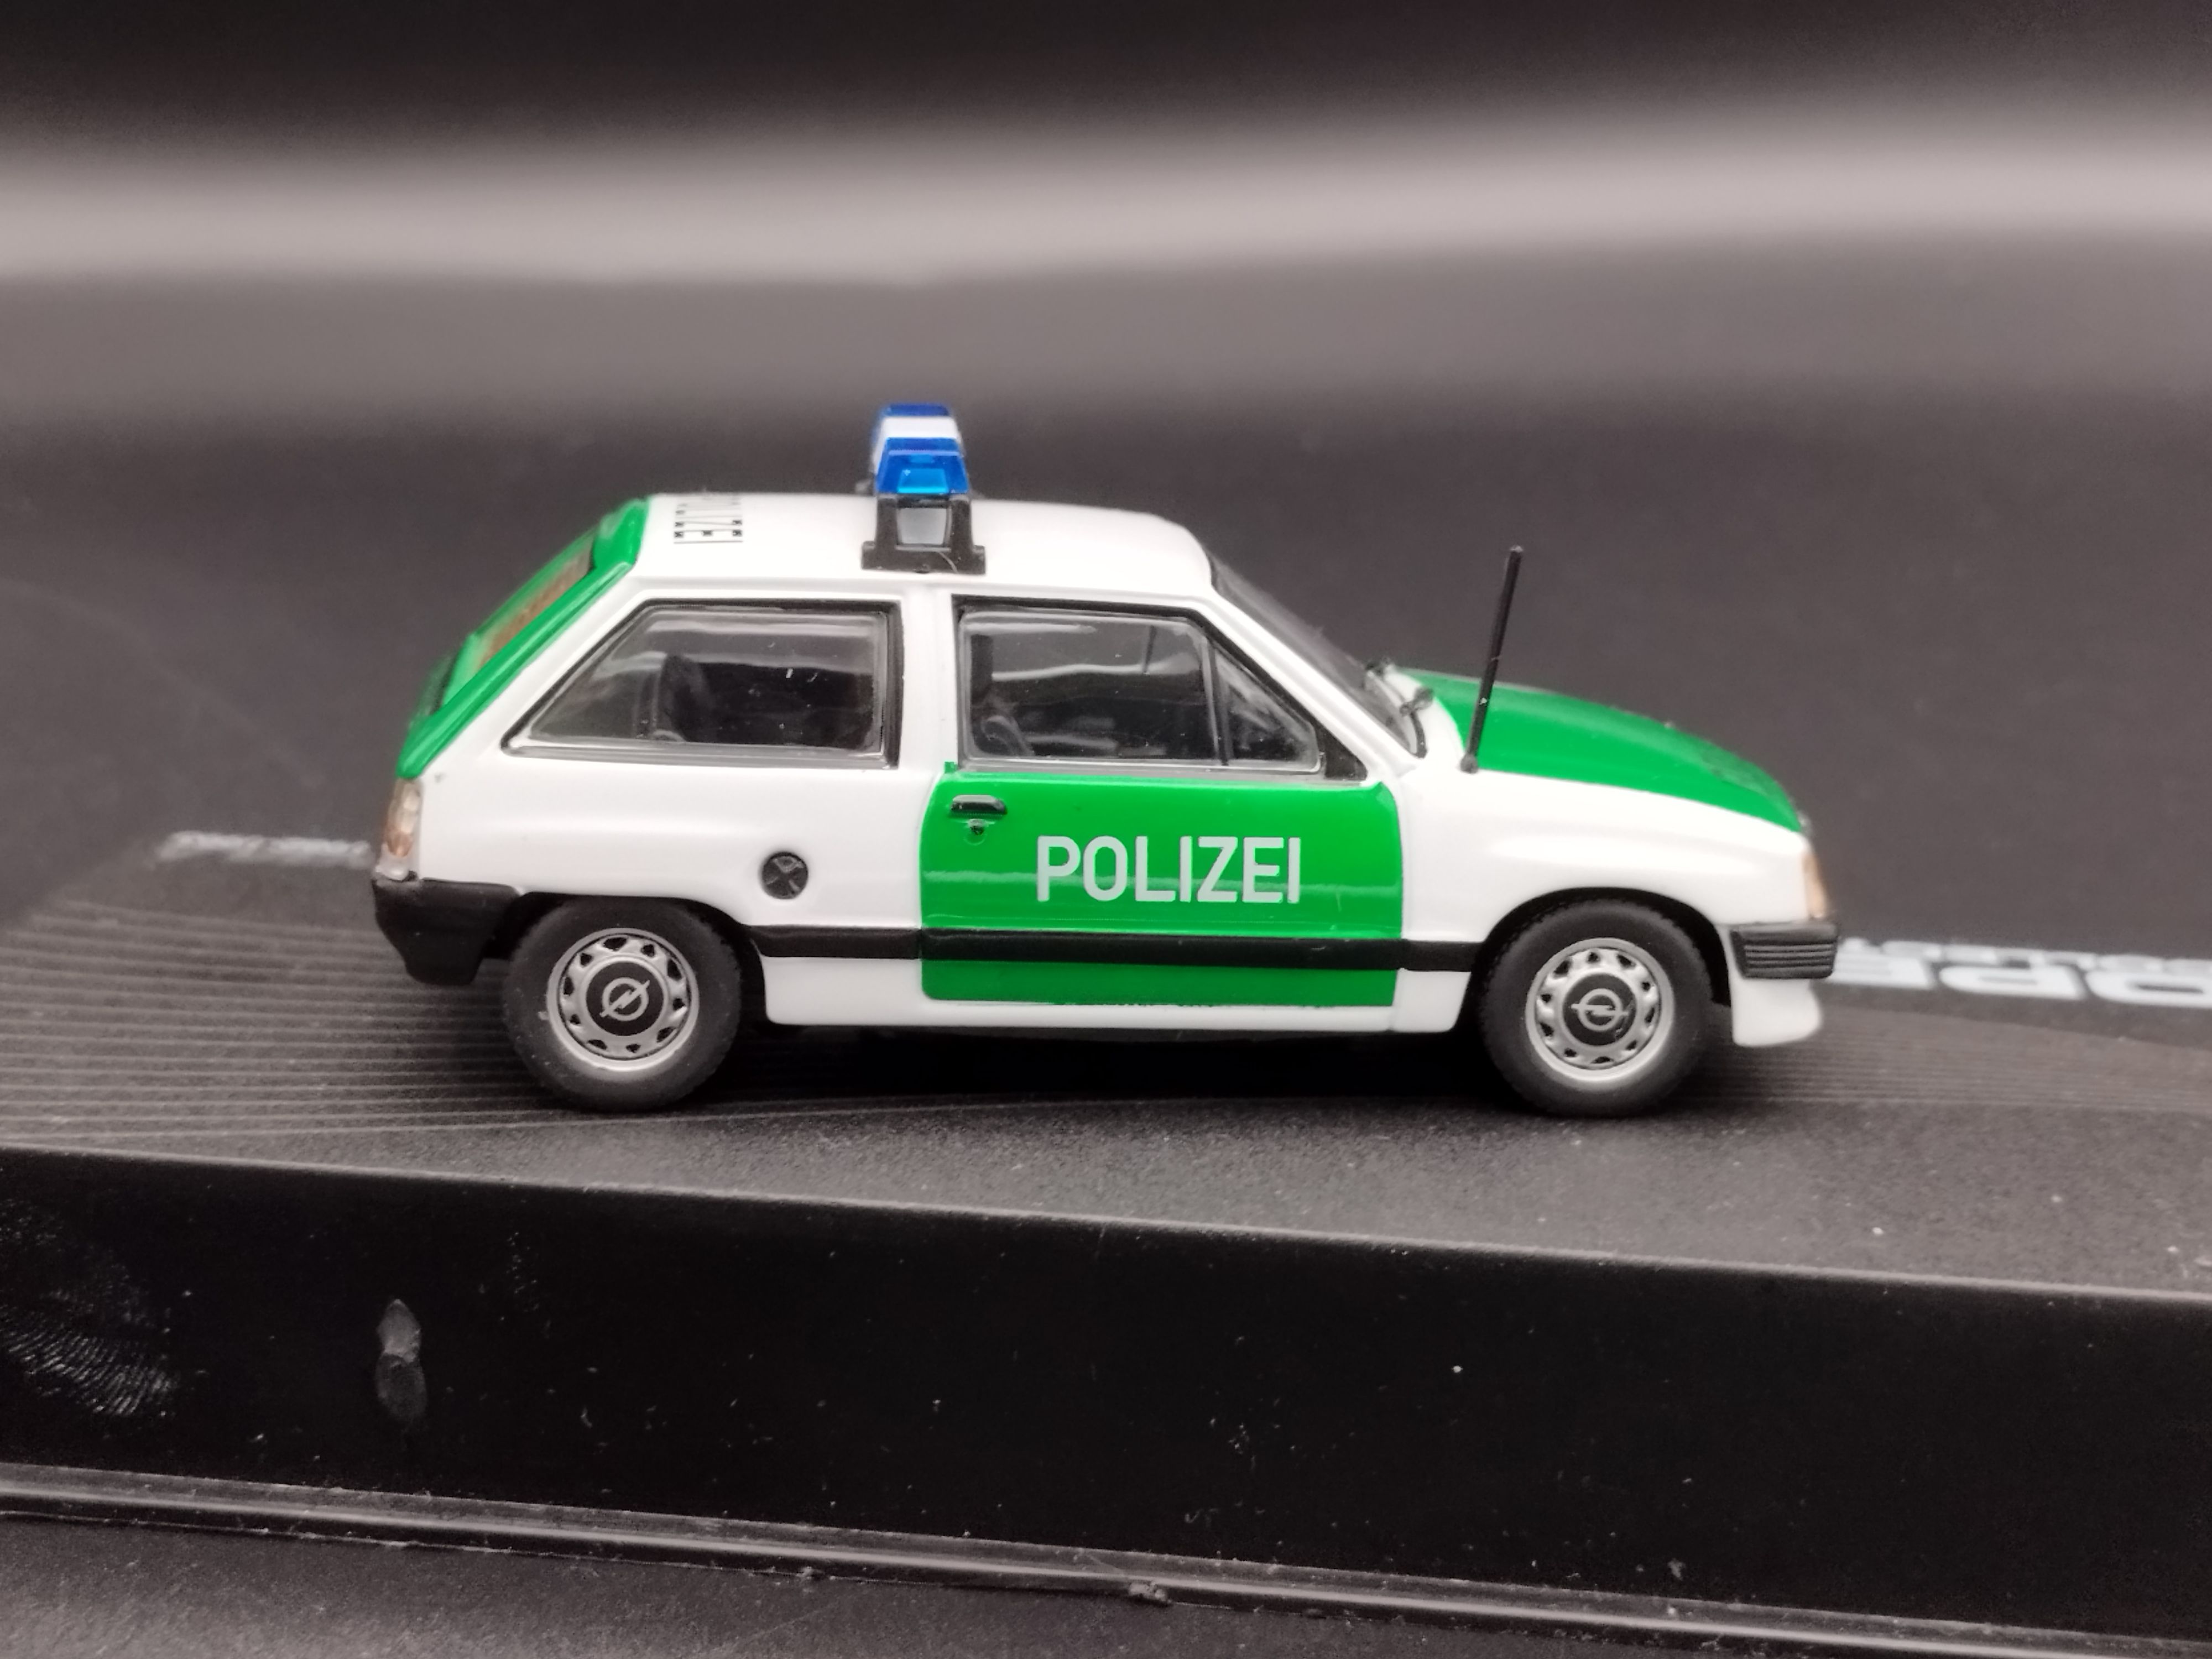 1:43 Opel Collection Opel Corsa A Polizei  model używany